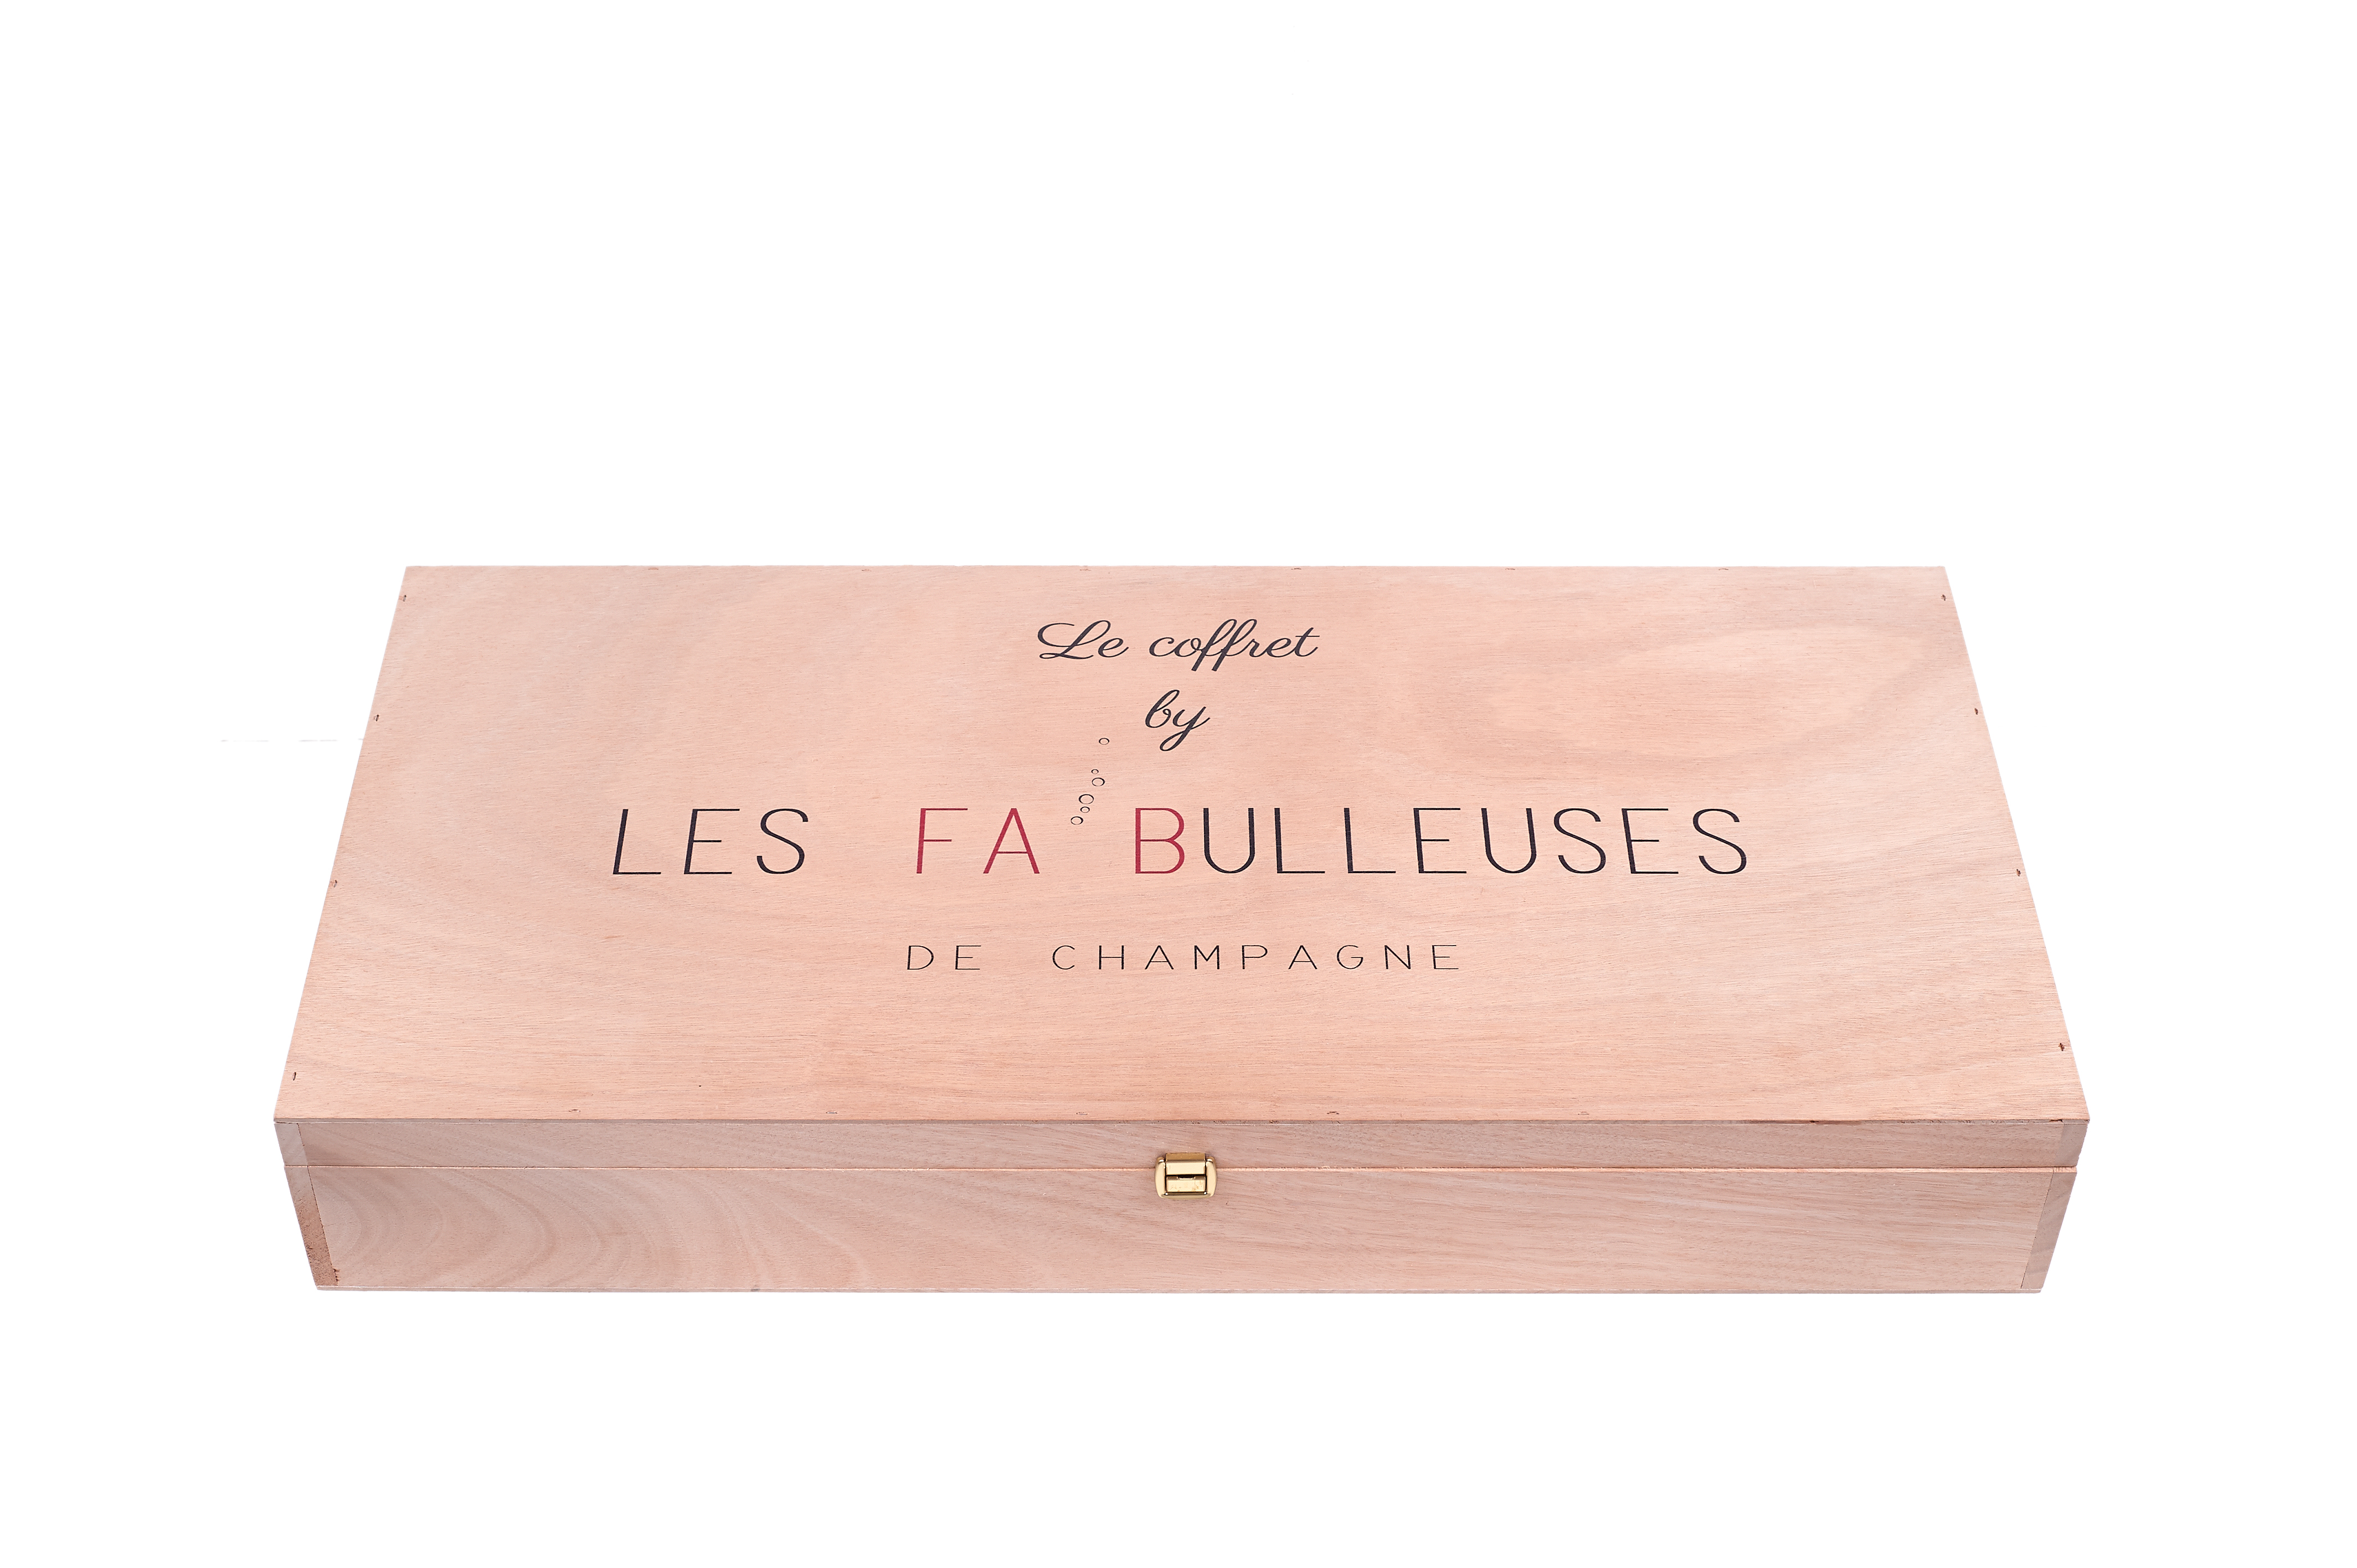 Les Fa'bulleuses de champagne wine box packaging coffret